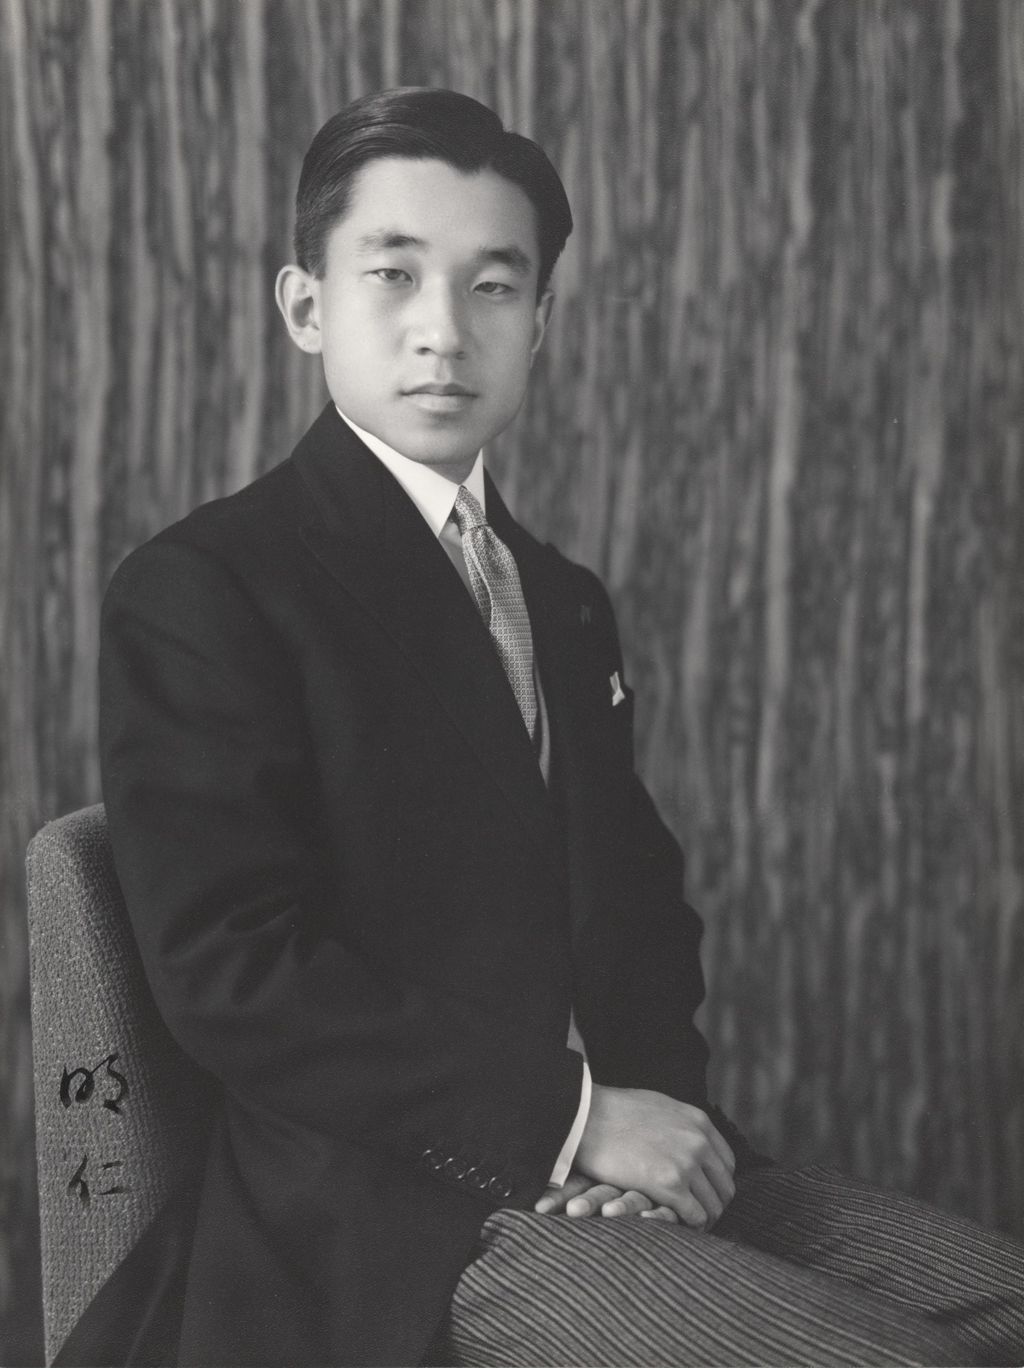 Miniature of Crown Prince Akihito of Japan